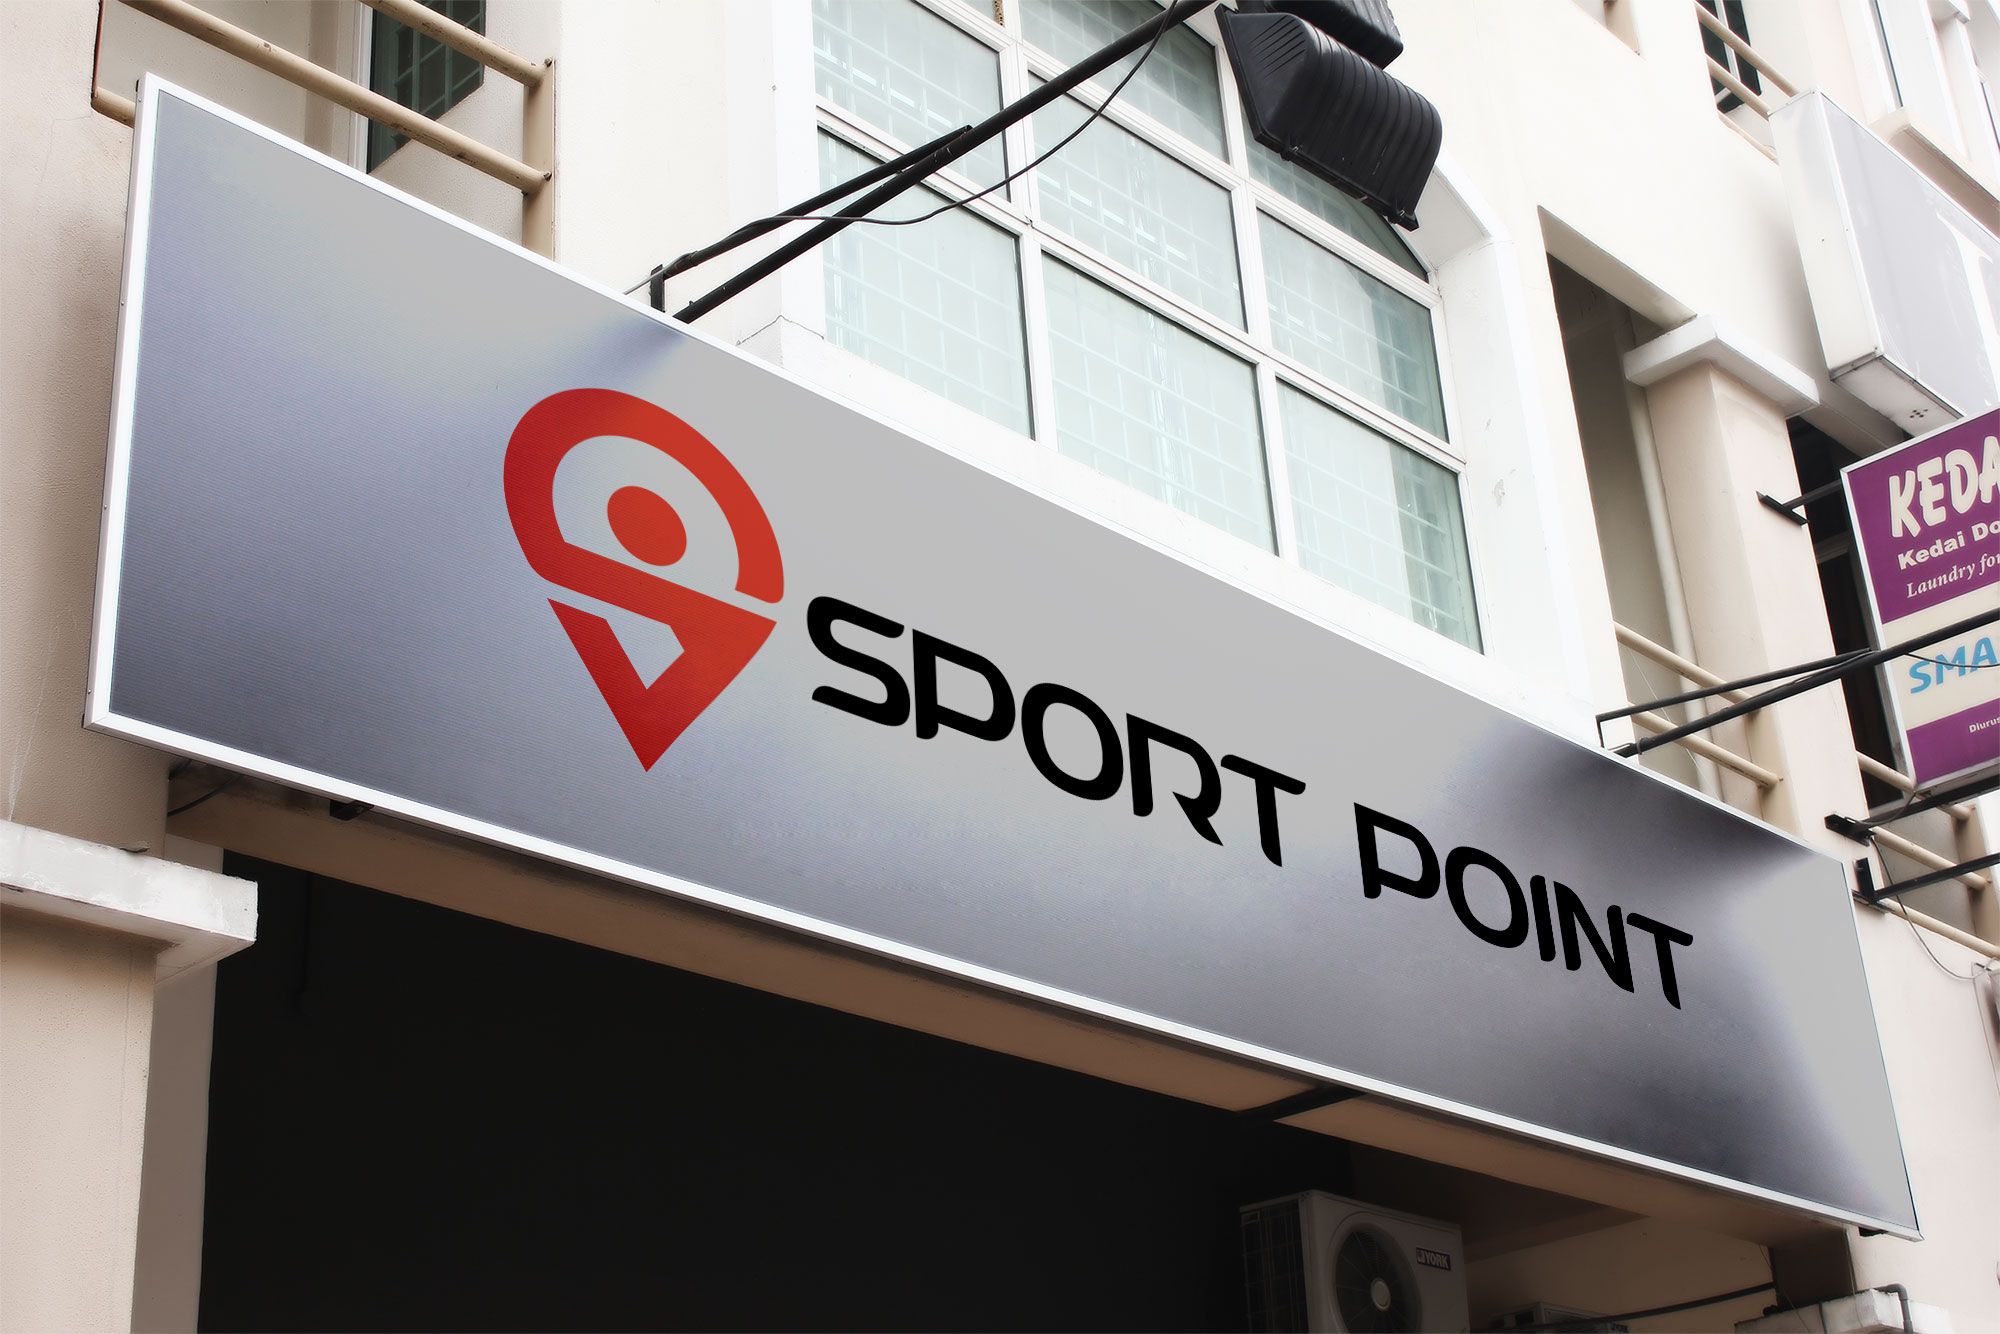 Брендбук для sport point - дизайнер robert3d